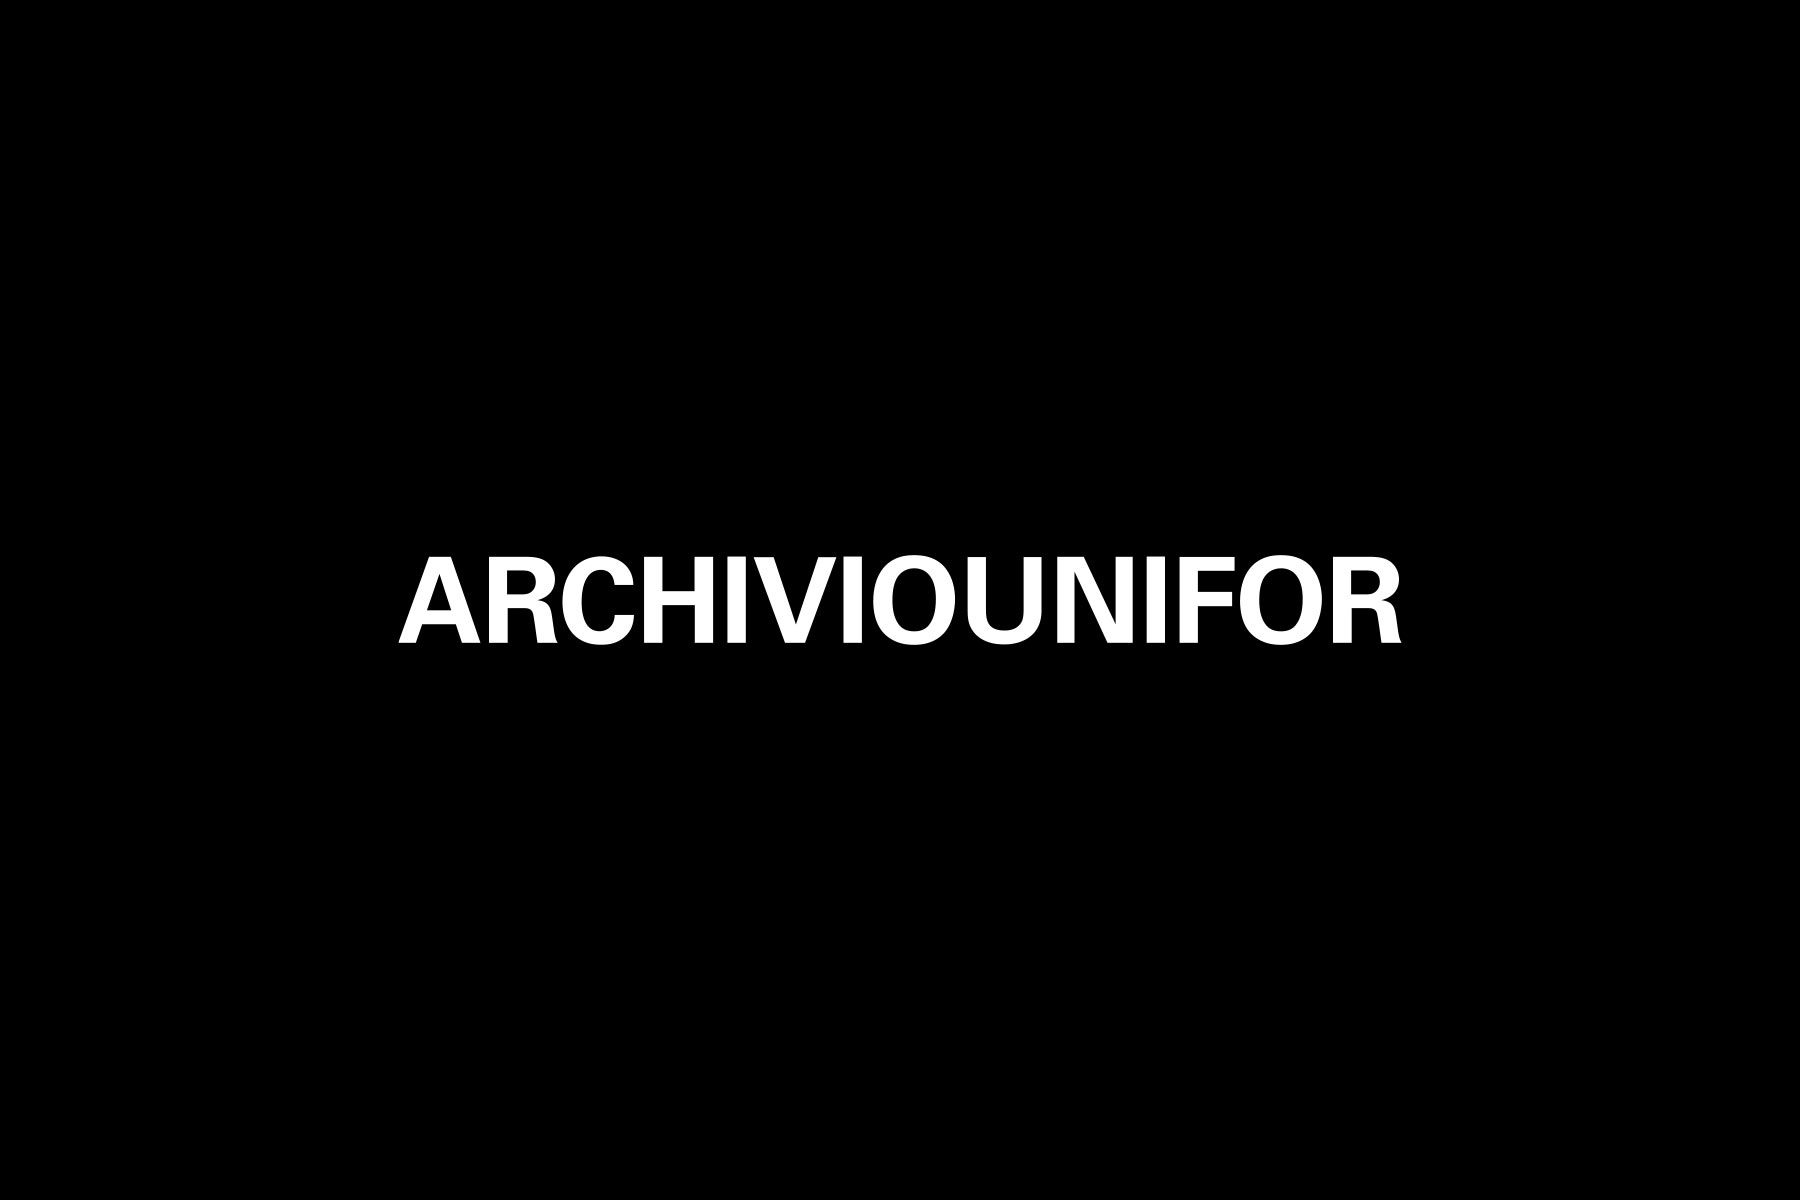 archiviounifor logo unifor